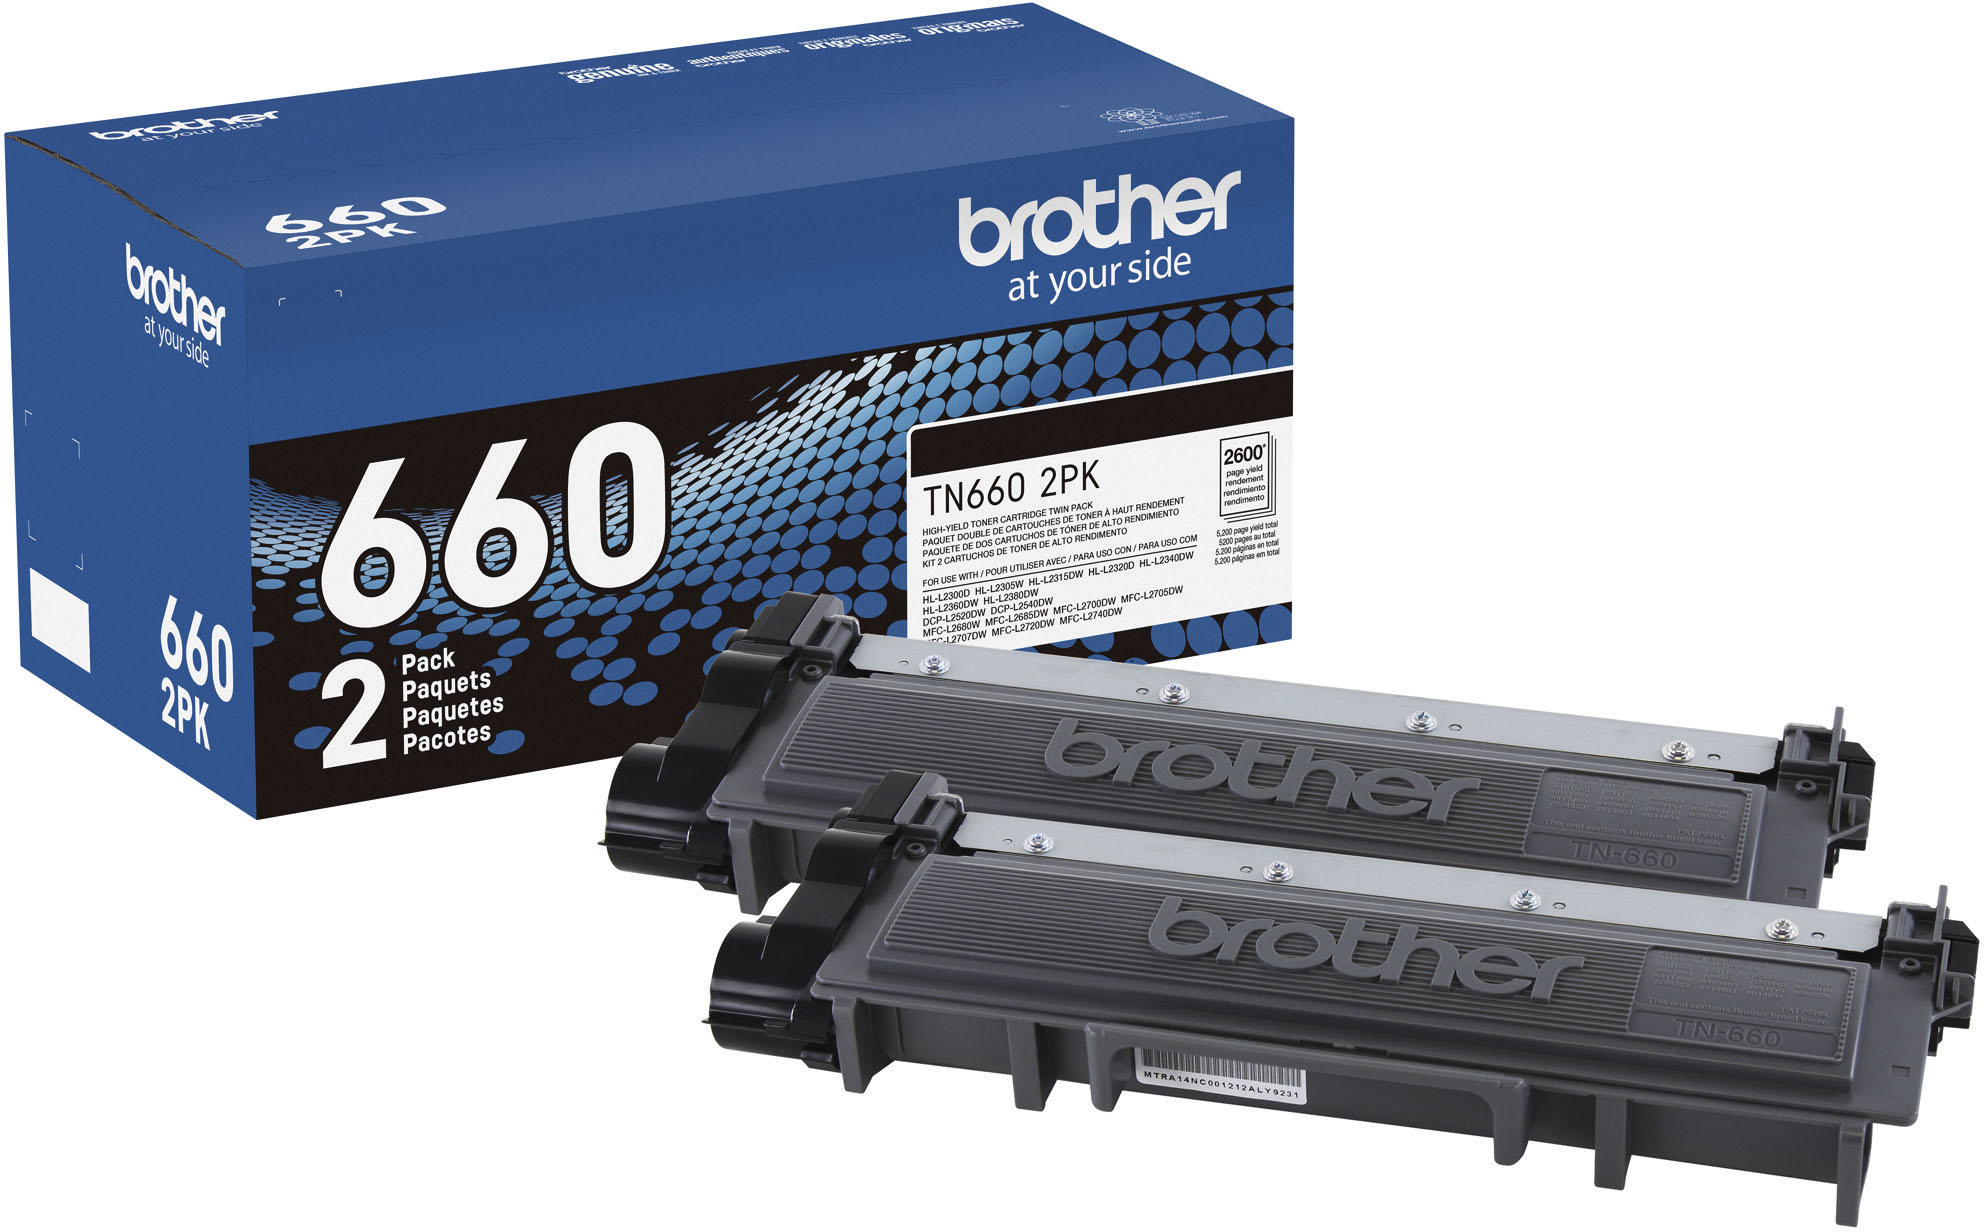 Toner Cartridges – Tagged DCP L2520– The Printer Depot